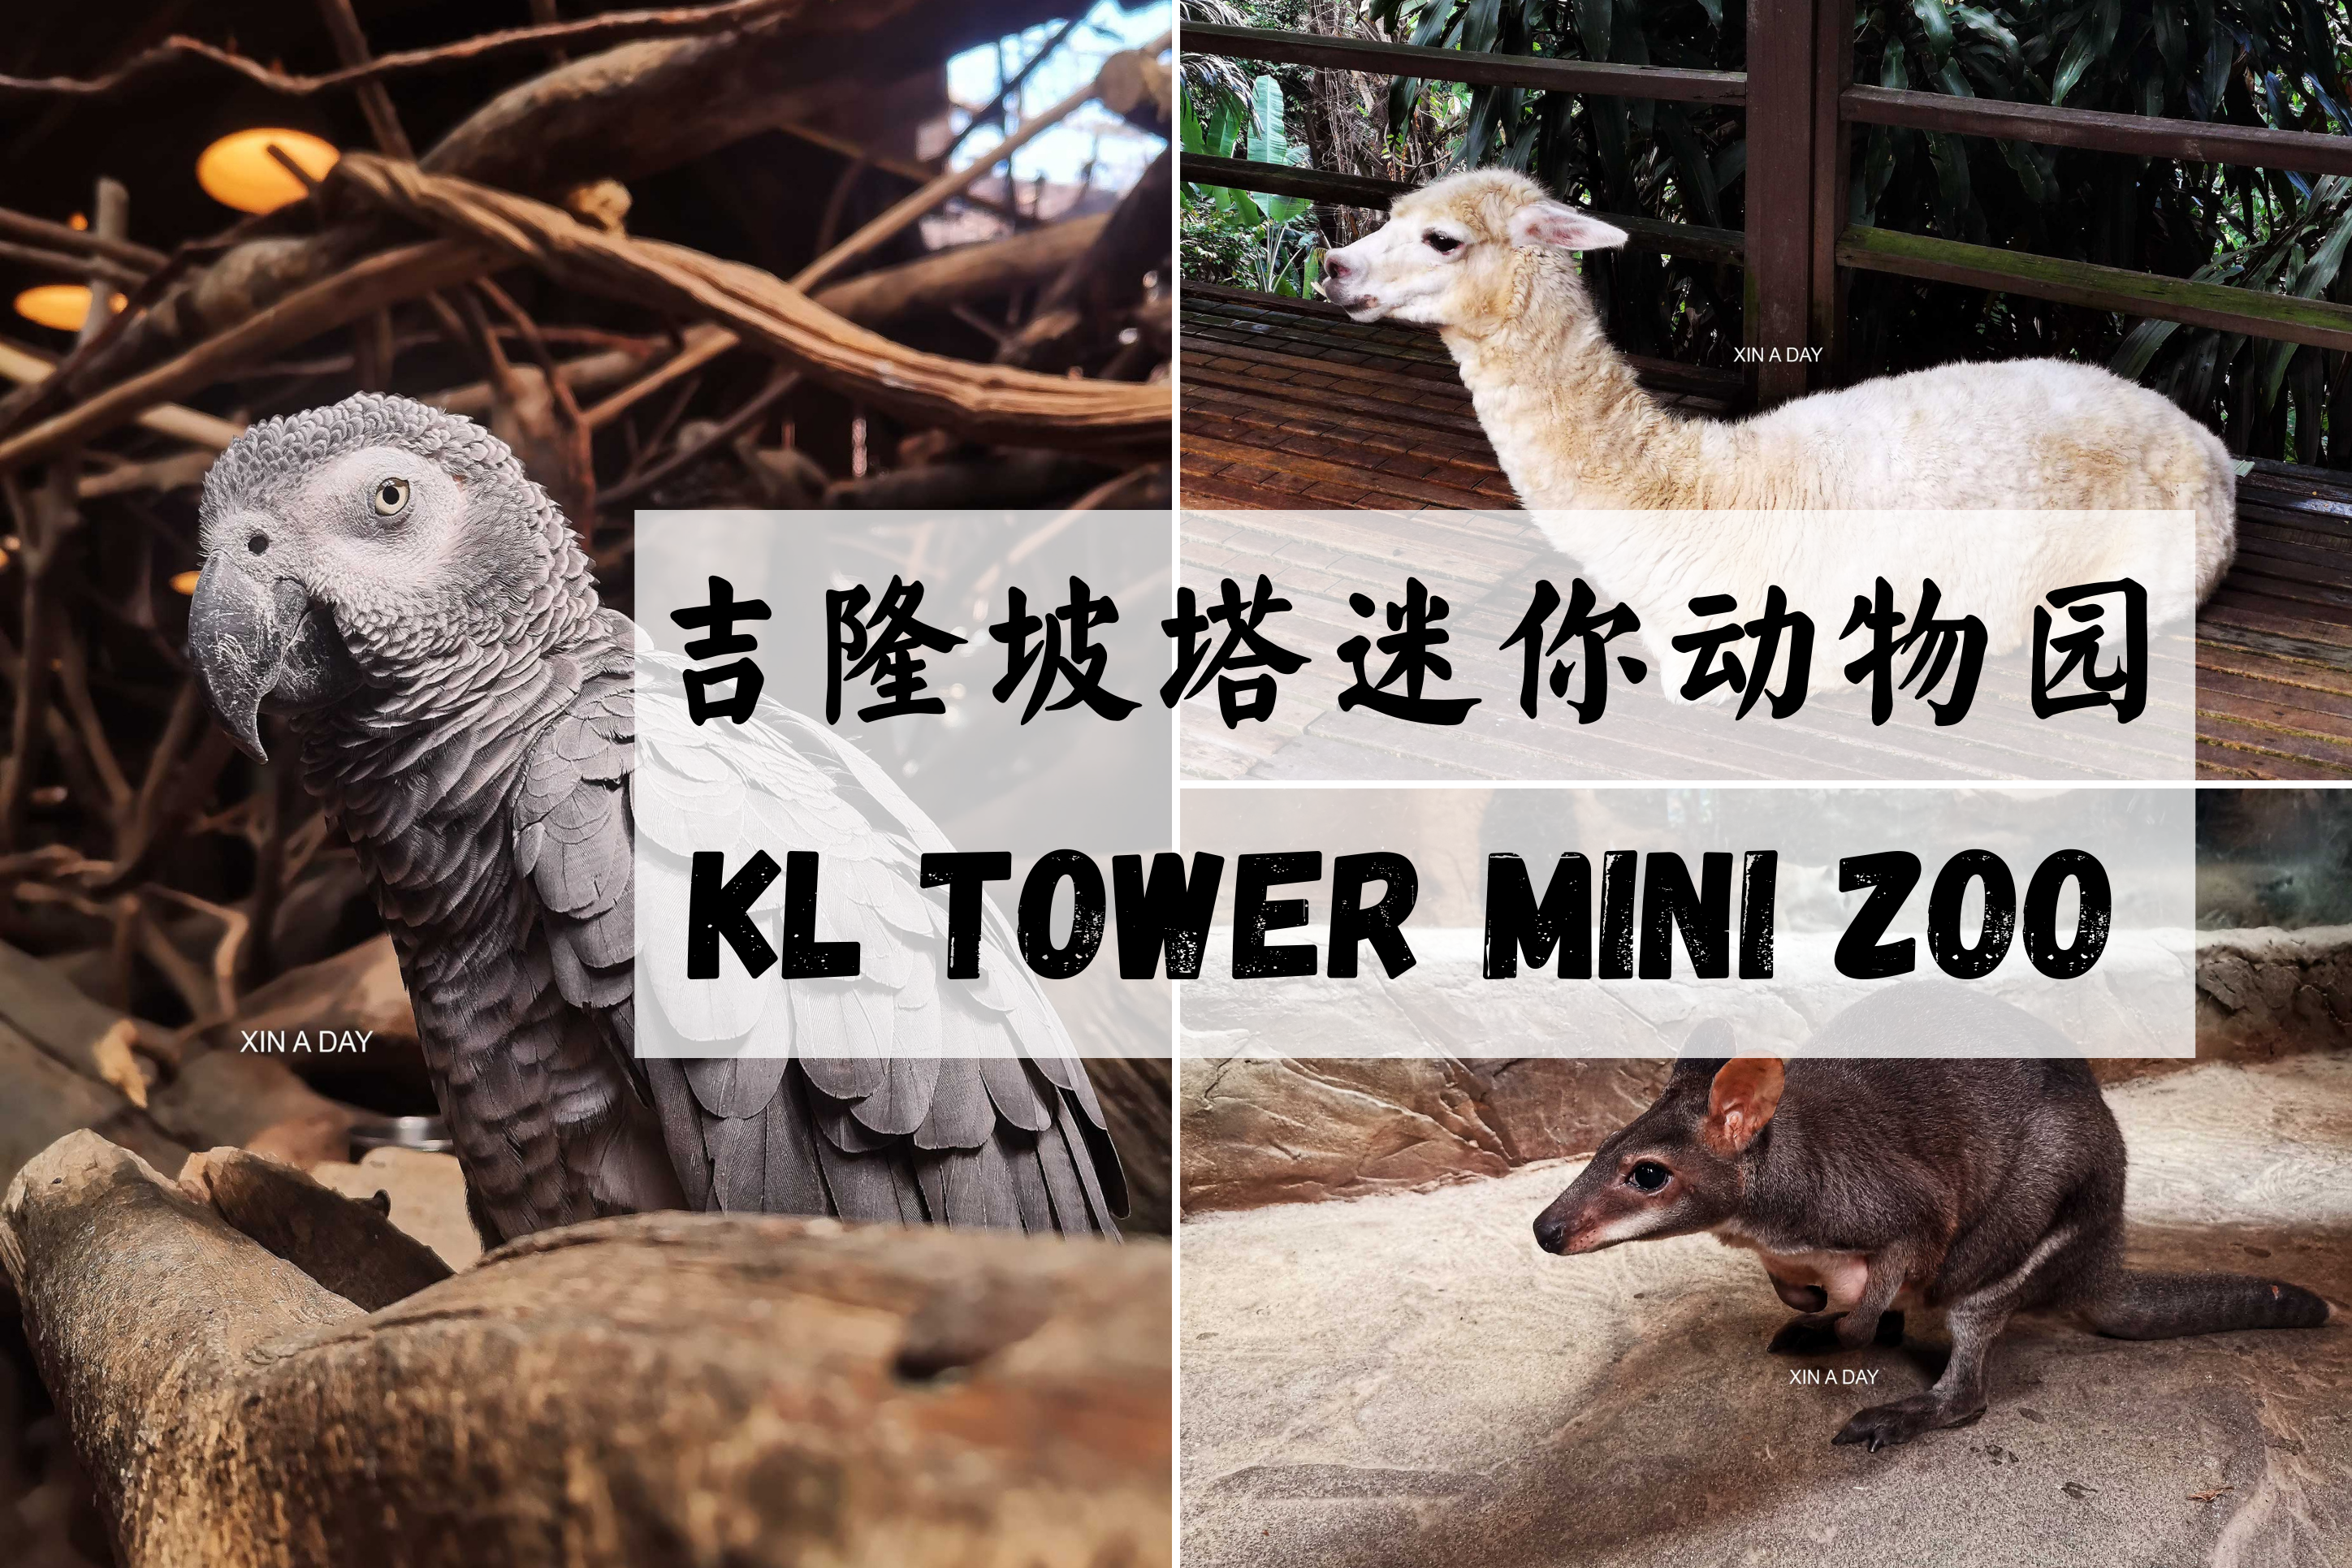 KL Tower Mini Zoo